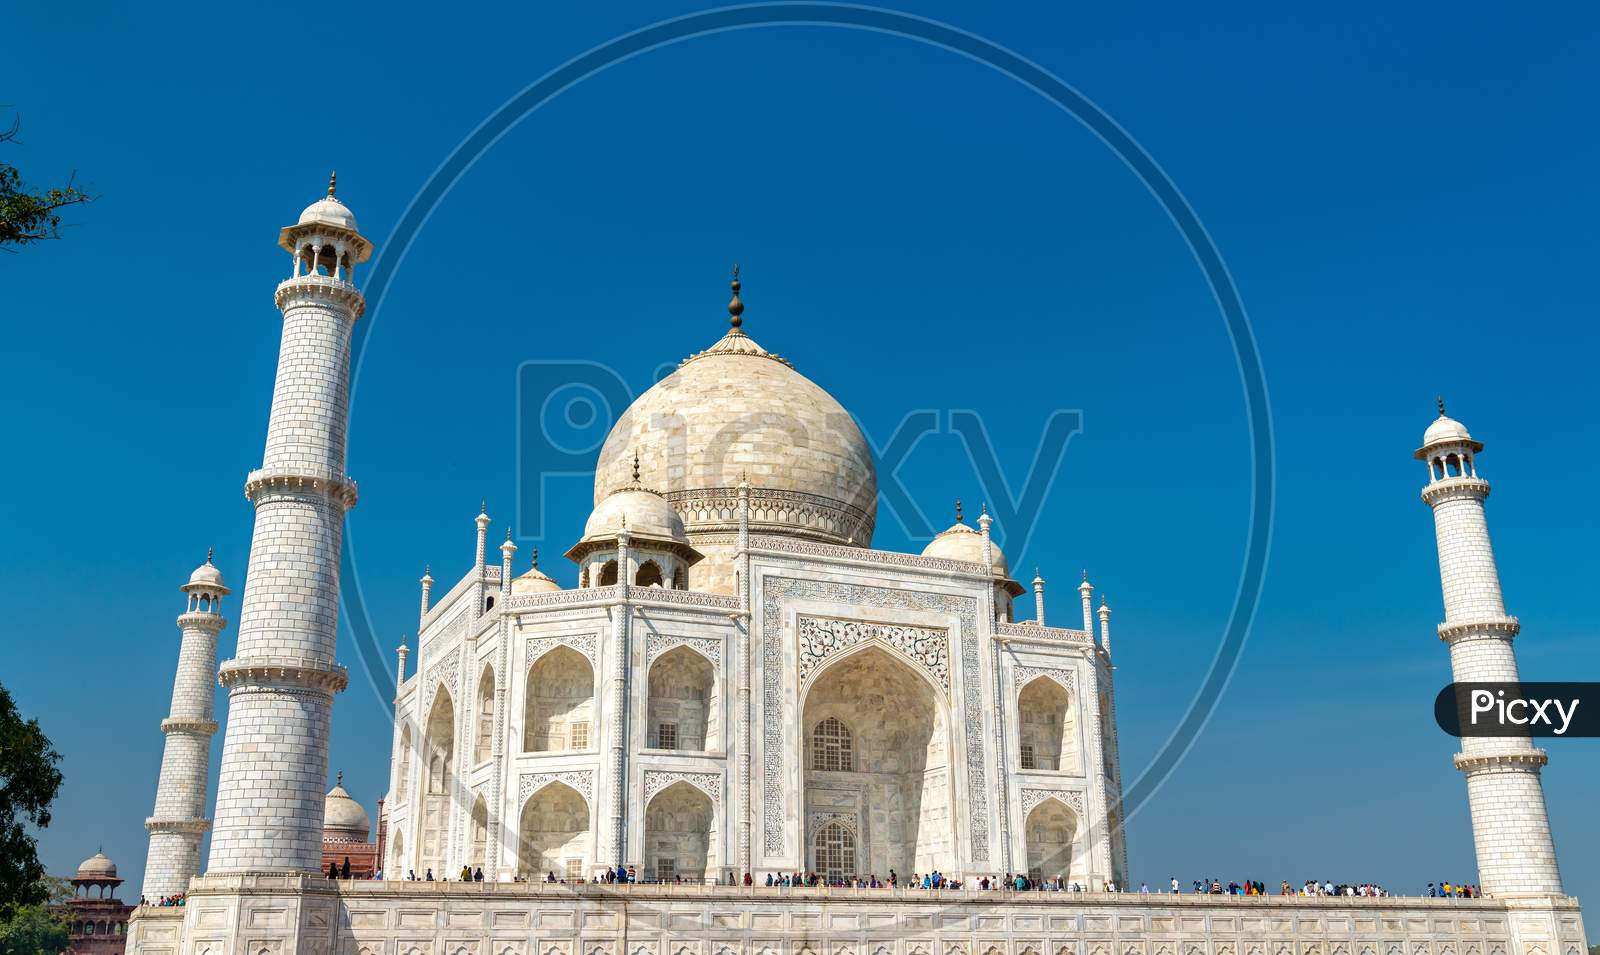 The Taj Mahal, The Most Famous Monument Of India. Agra - Uttar Pradesh